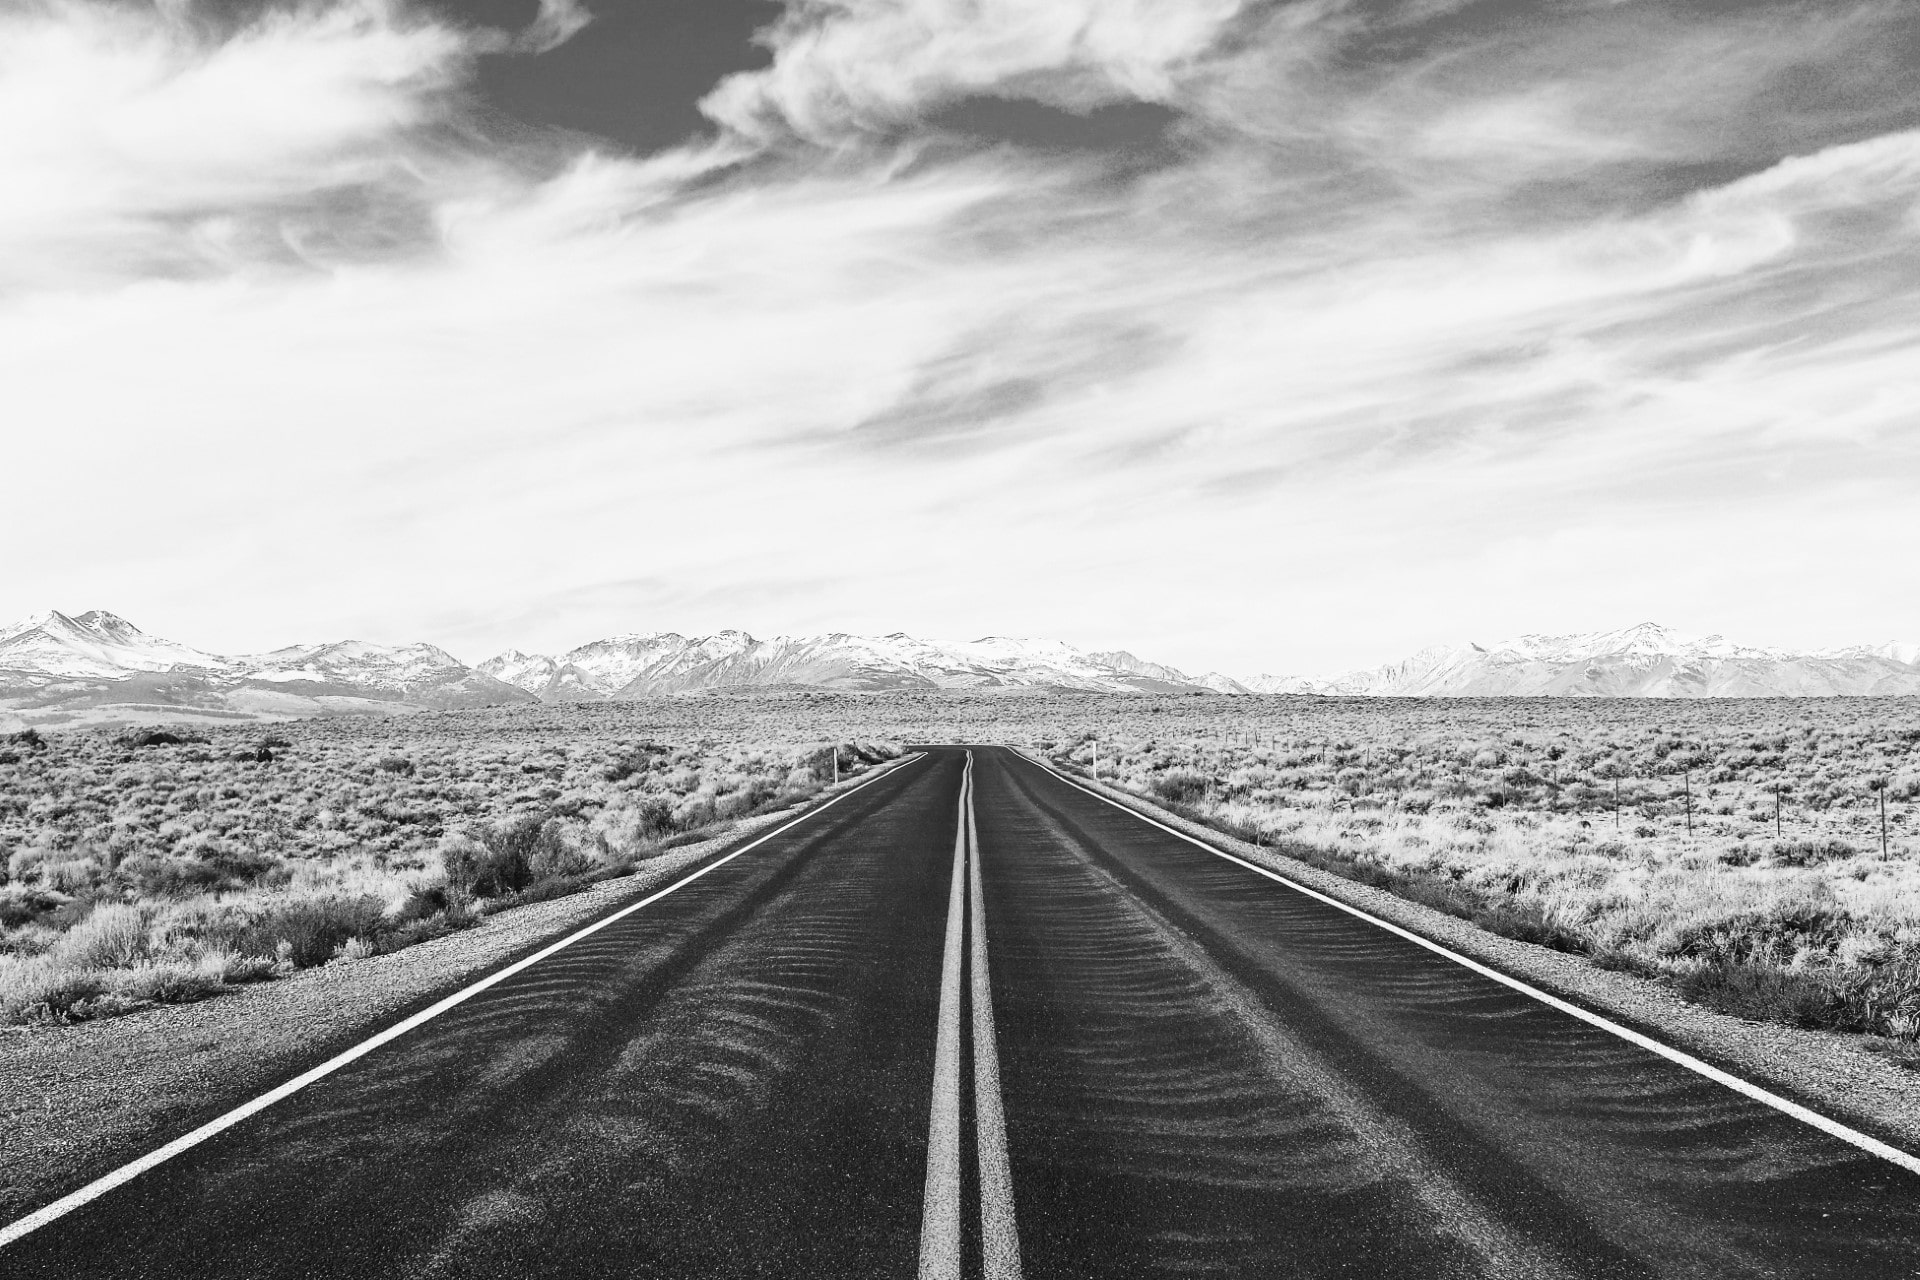 Centered Desert Road with a Dark Overlay